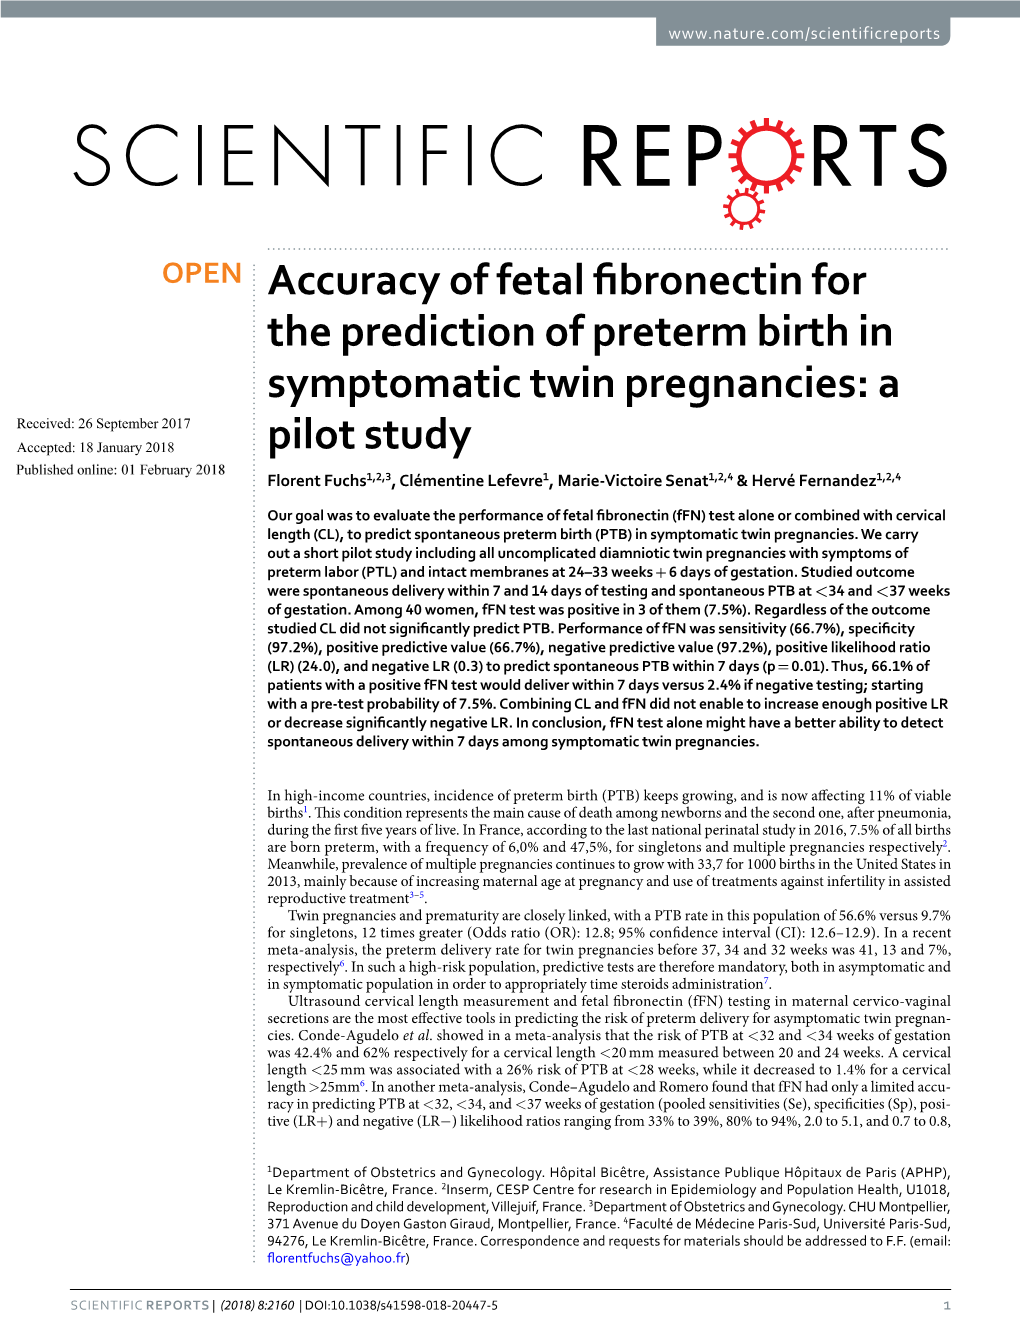 Accuracy of Fetal Fibronectin for the Prediction of Preterm Birth